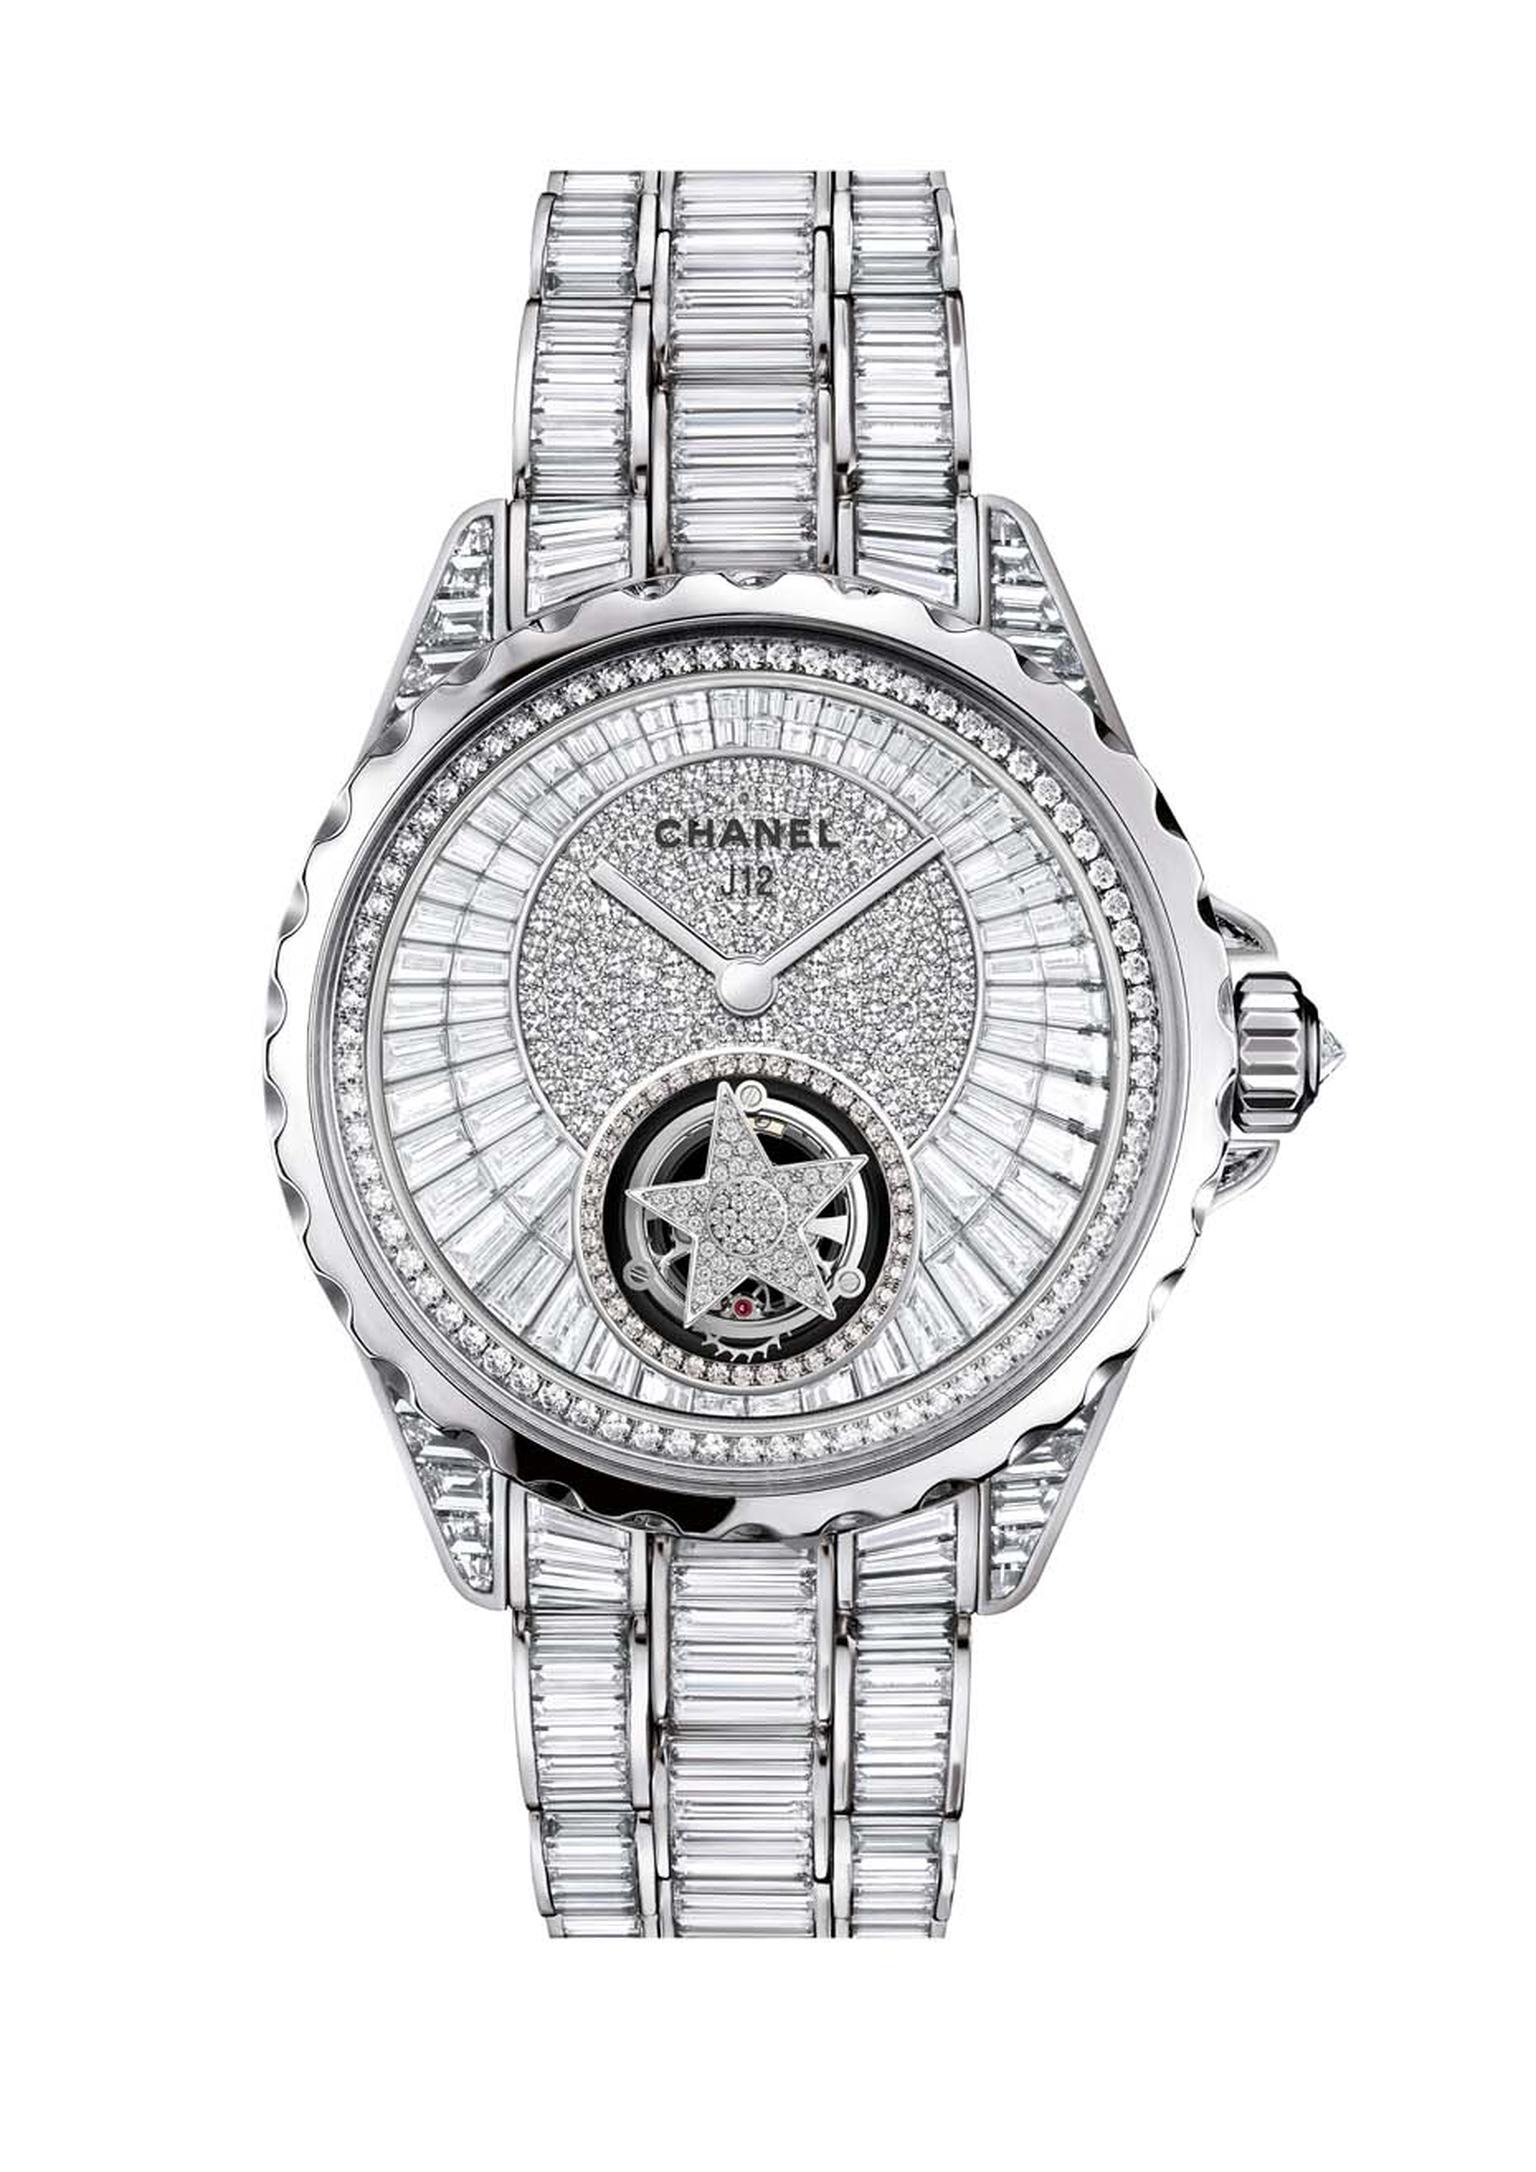 Chanel J12 Flying Tourbillon features a diamond-set star